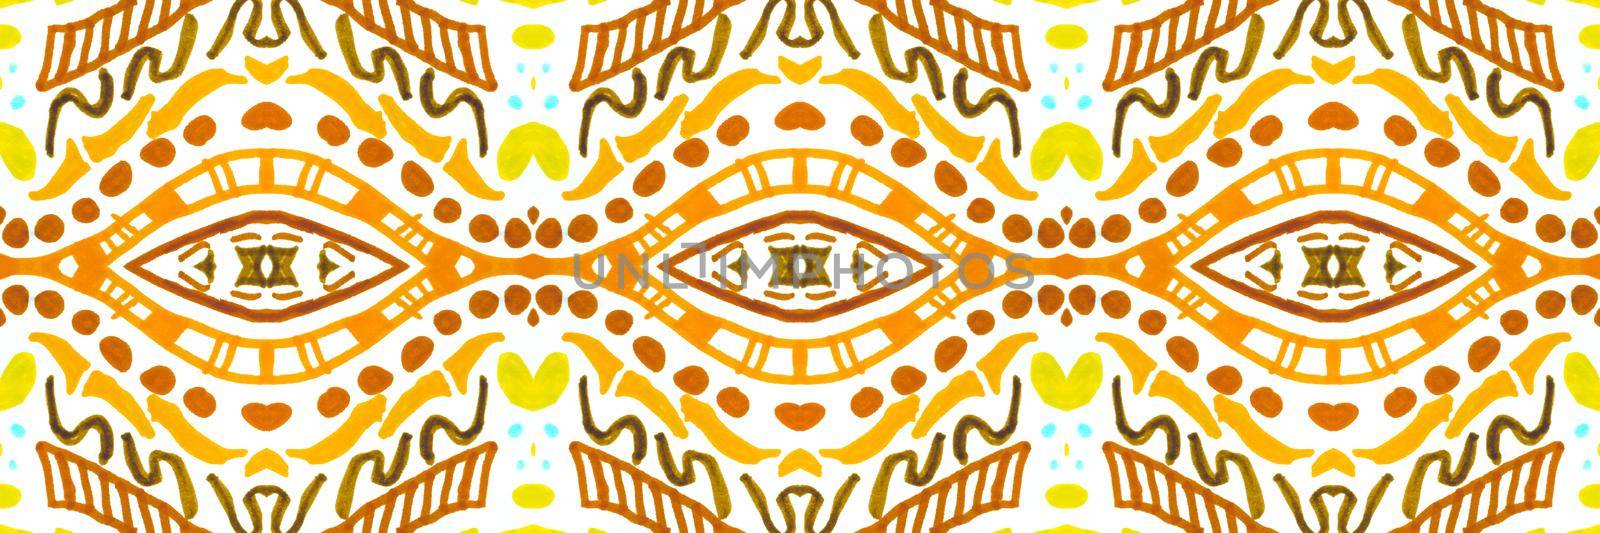 Retro mosaic pattern. Abstract geometric ethnic background. by YASNARADA